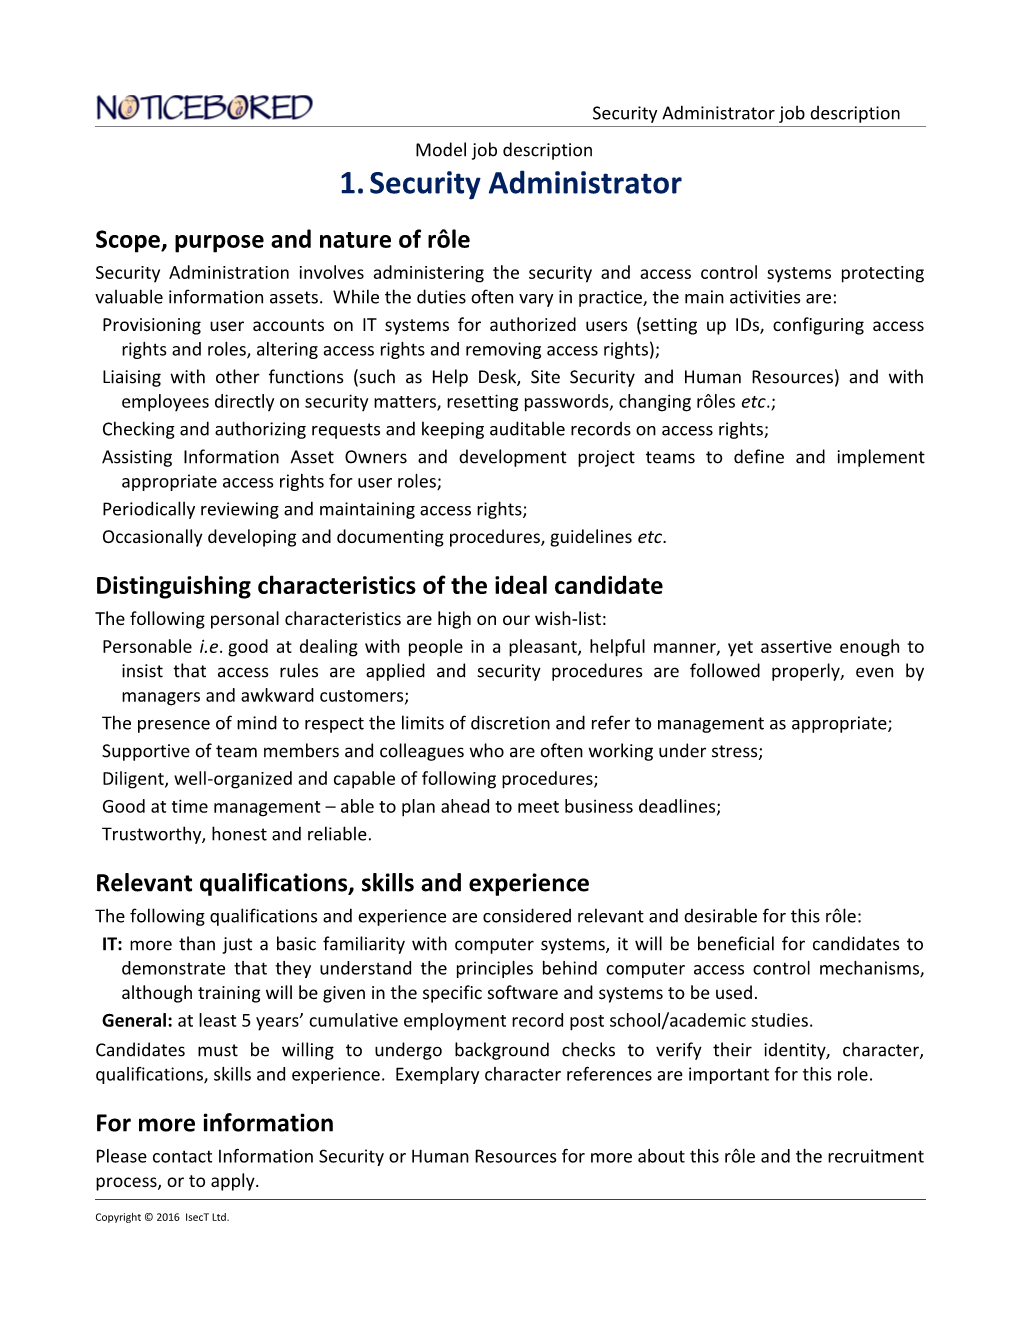 NB Model Job Description for Security Administrator